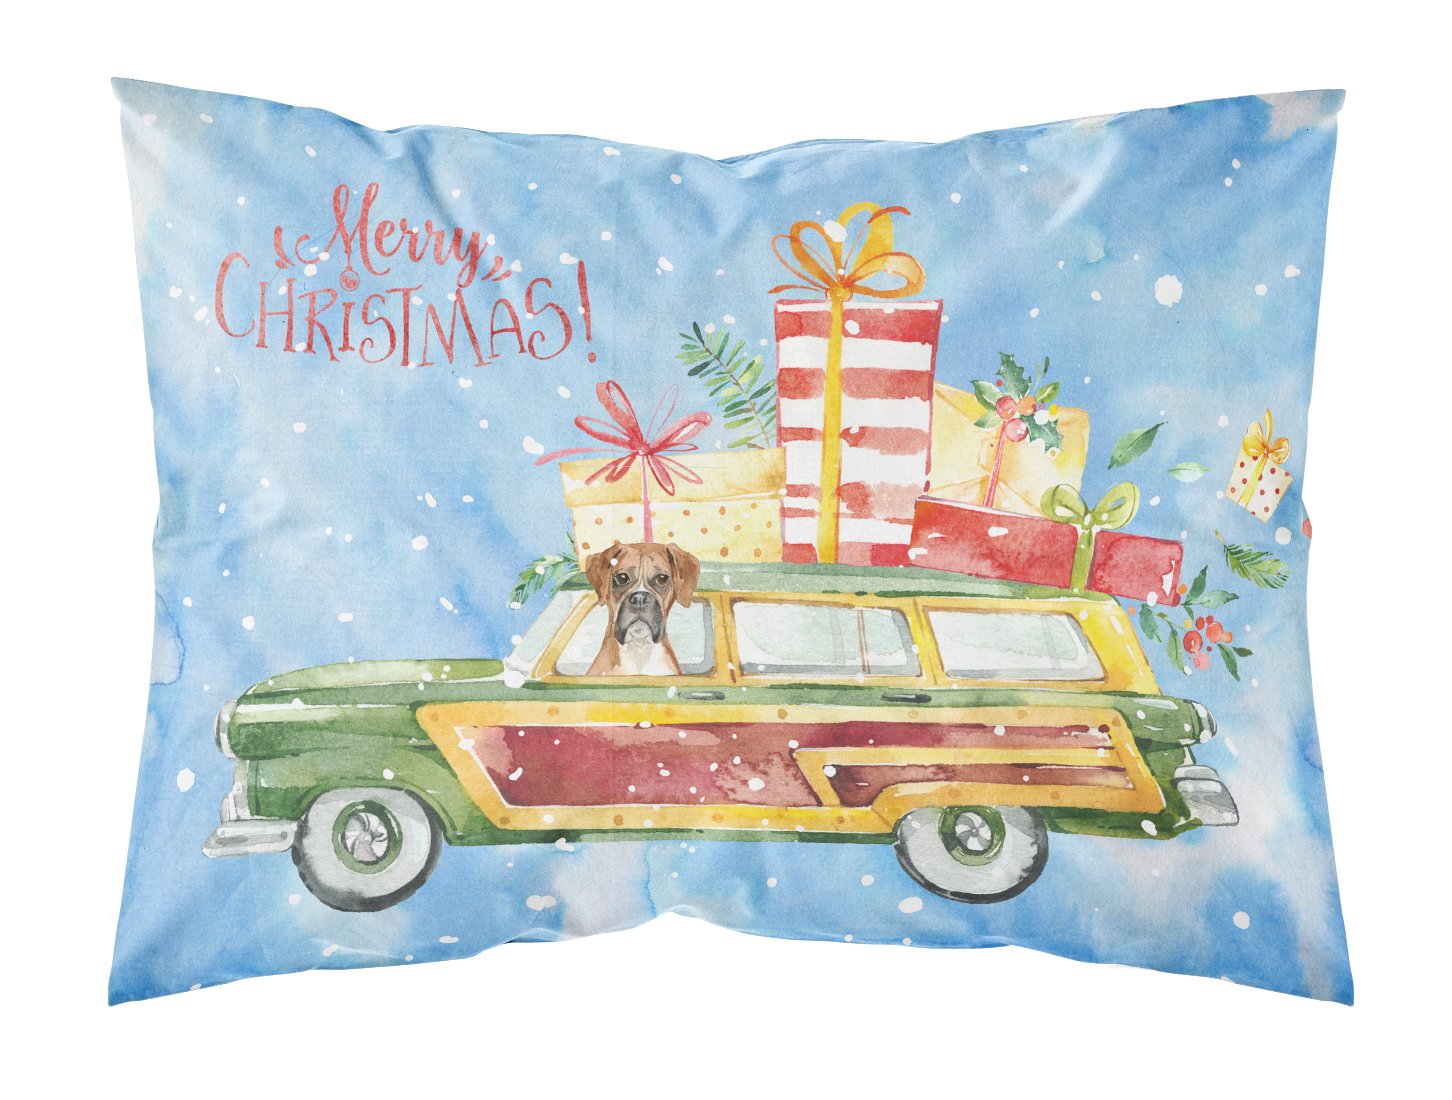 Merry Christmas Boxer Fabric Standard Pillowcase CK2399PILLOWCASE by Caroline's Treasures